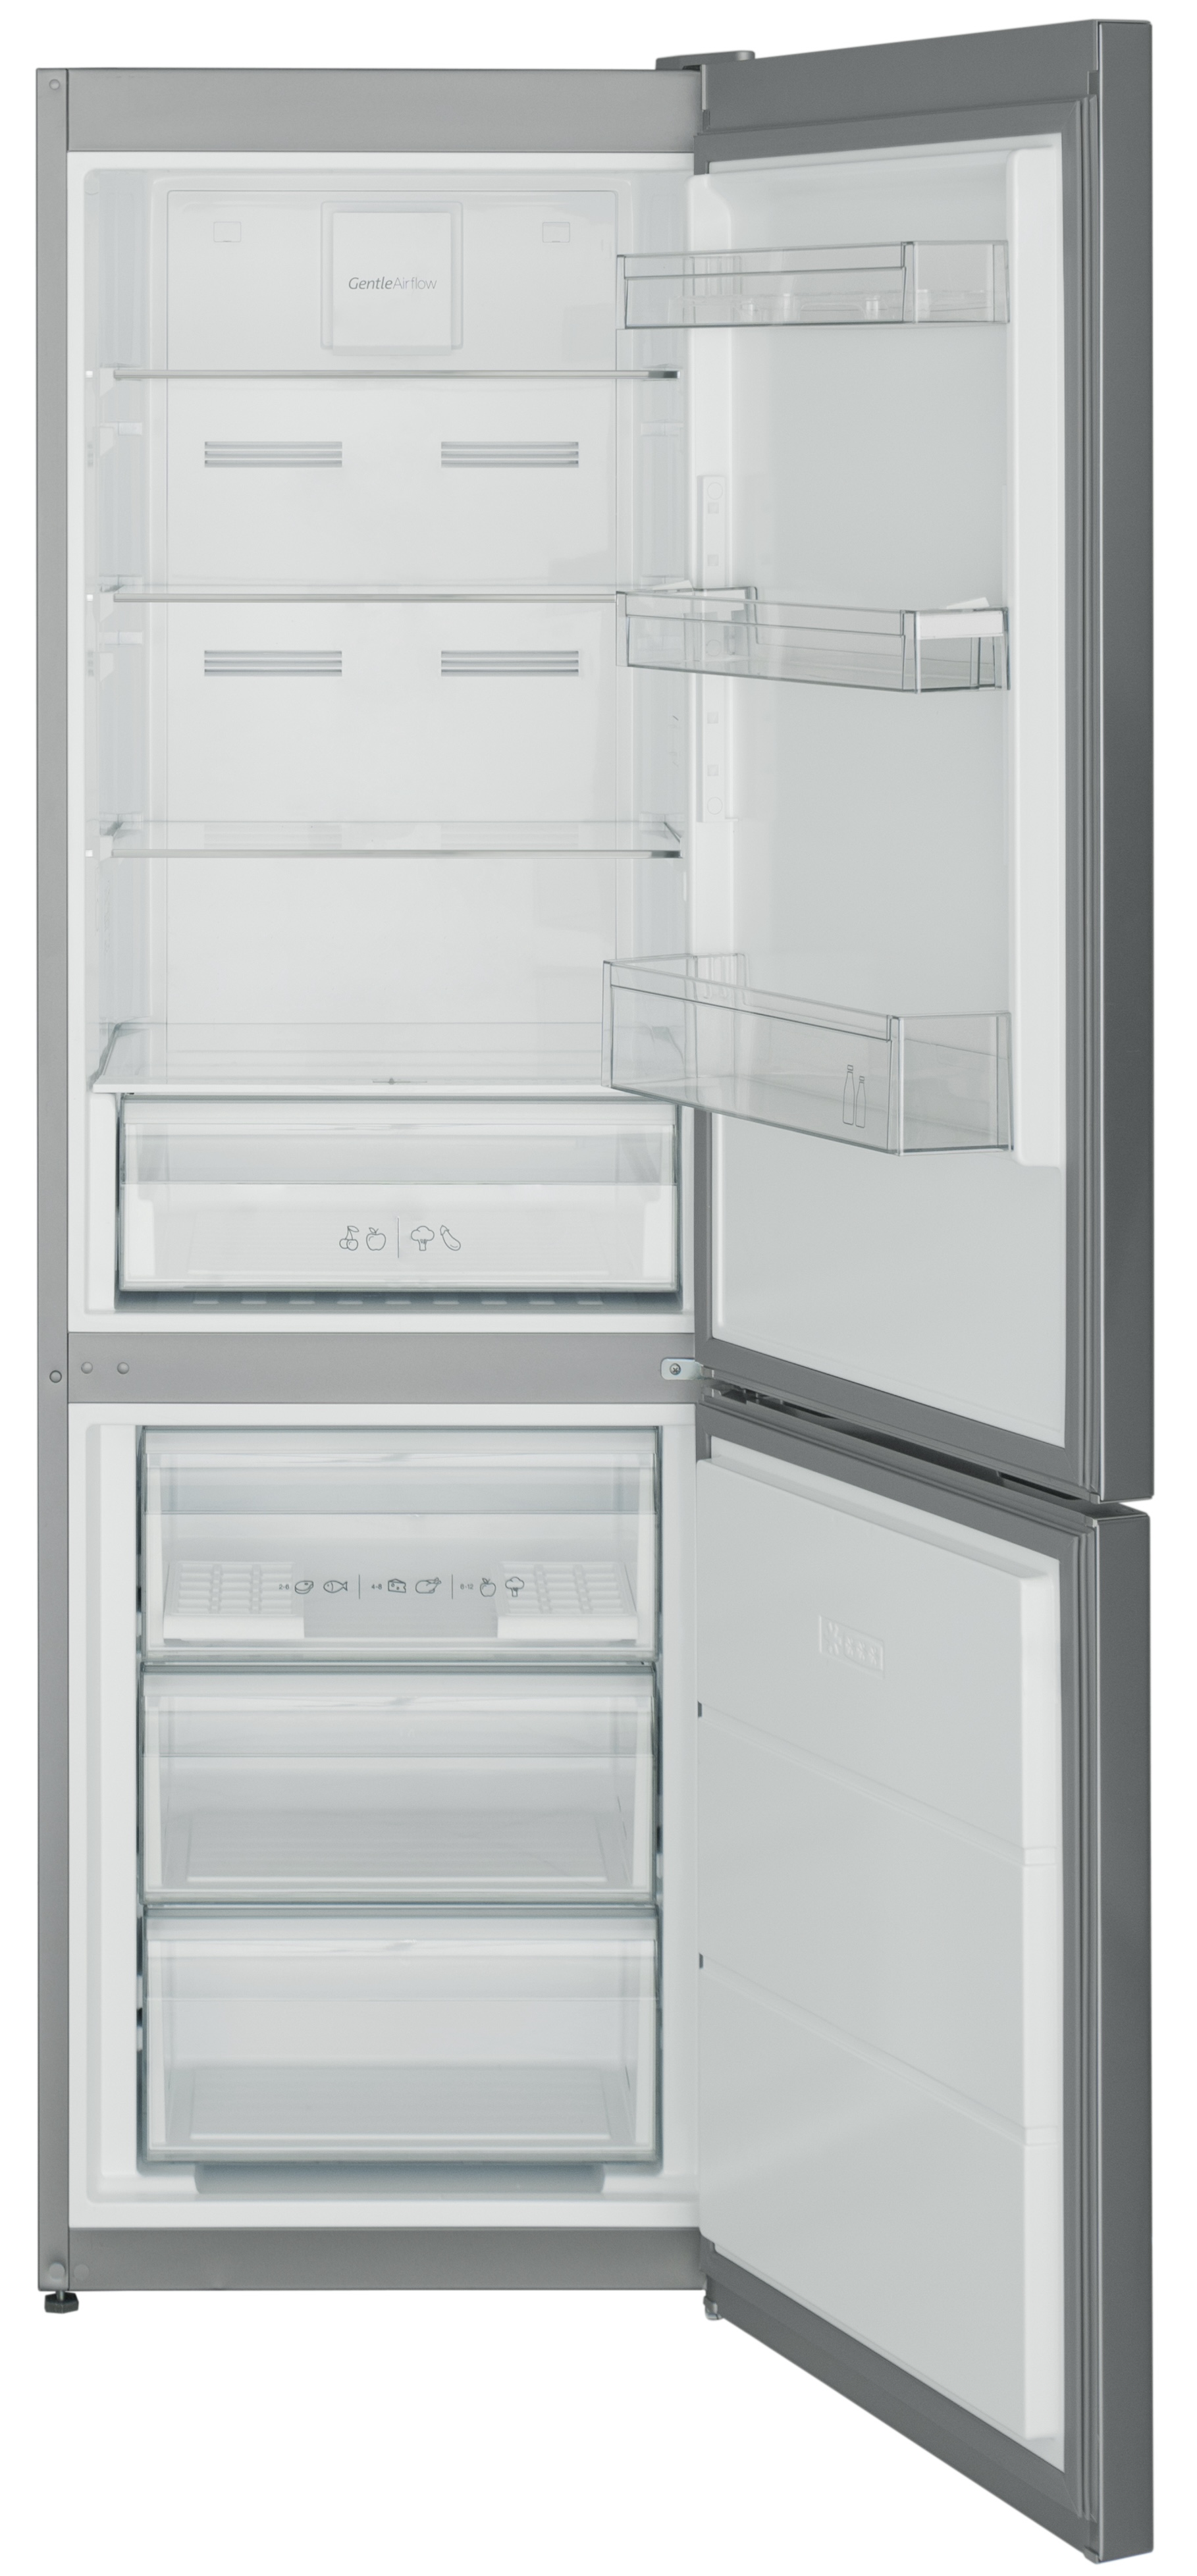 Холодильник Sharp SJ-BA10IHXI1-UA цена 20890.00 грн - фотография 2